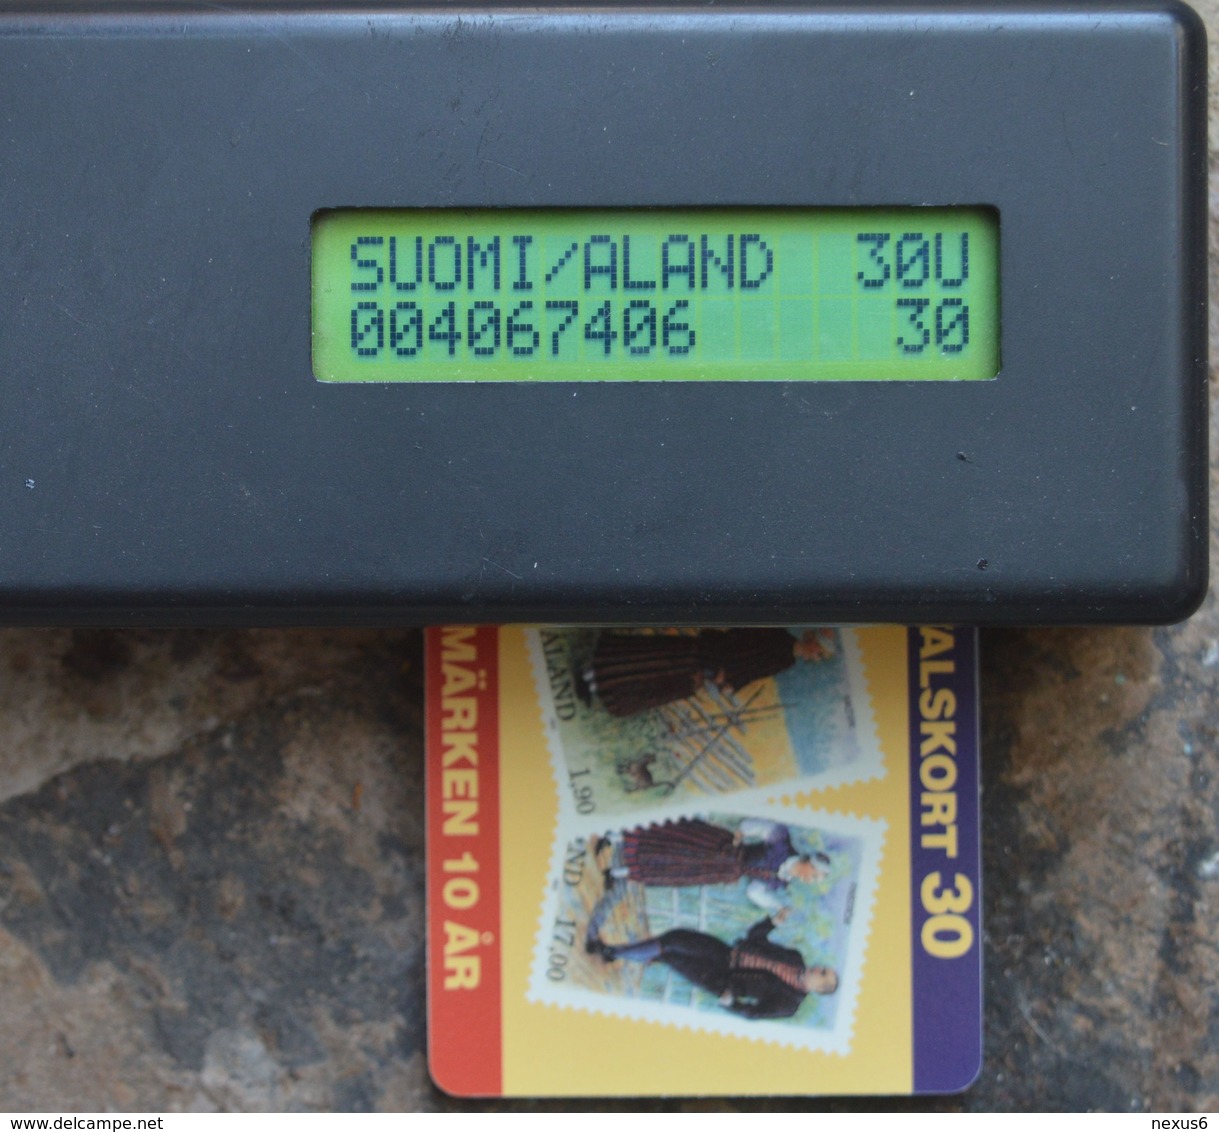 Aland - Åland Post - Stamps Of Åland - Chip SC7 - 11.1993, 26.000ex, Mint (check Photos!) - Aland